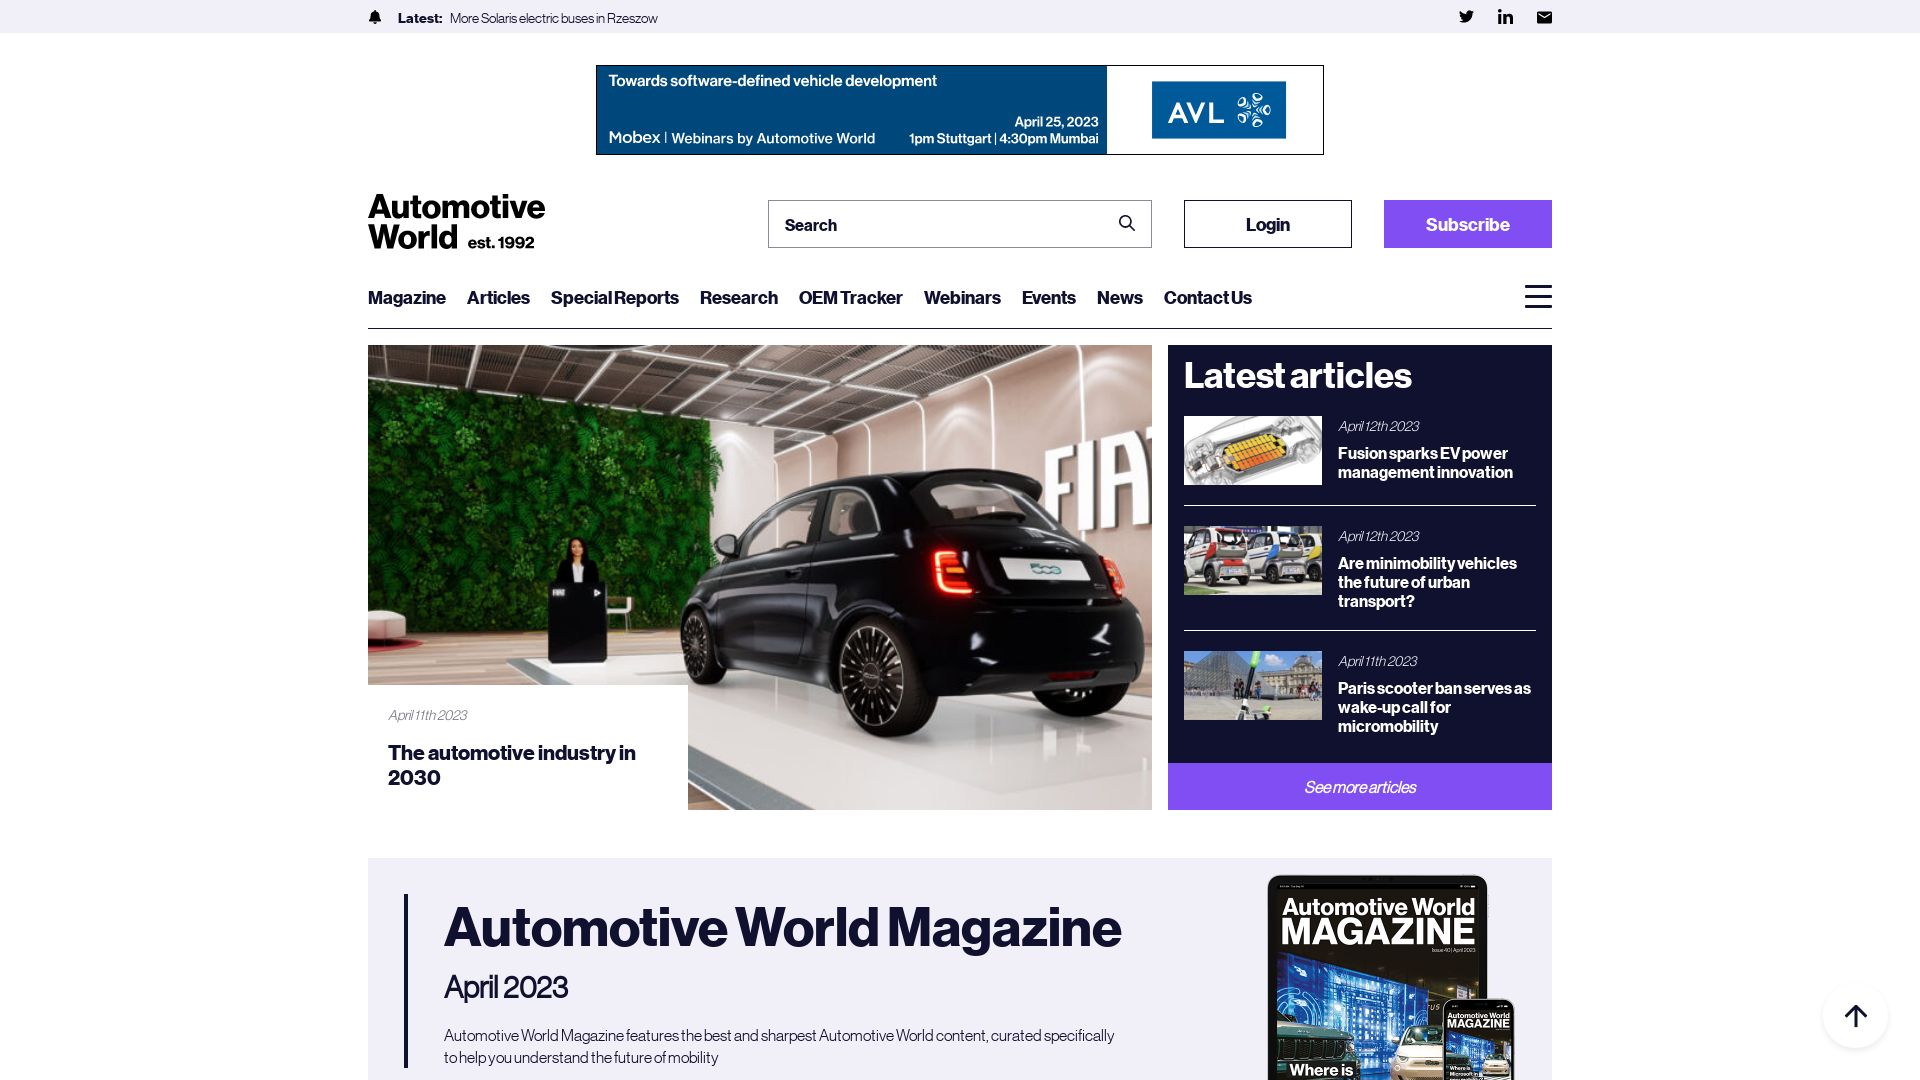 Website status automotiveworld.com is   ONLINE